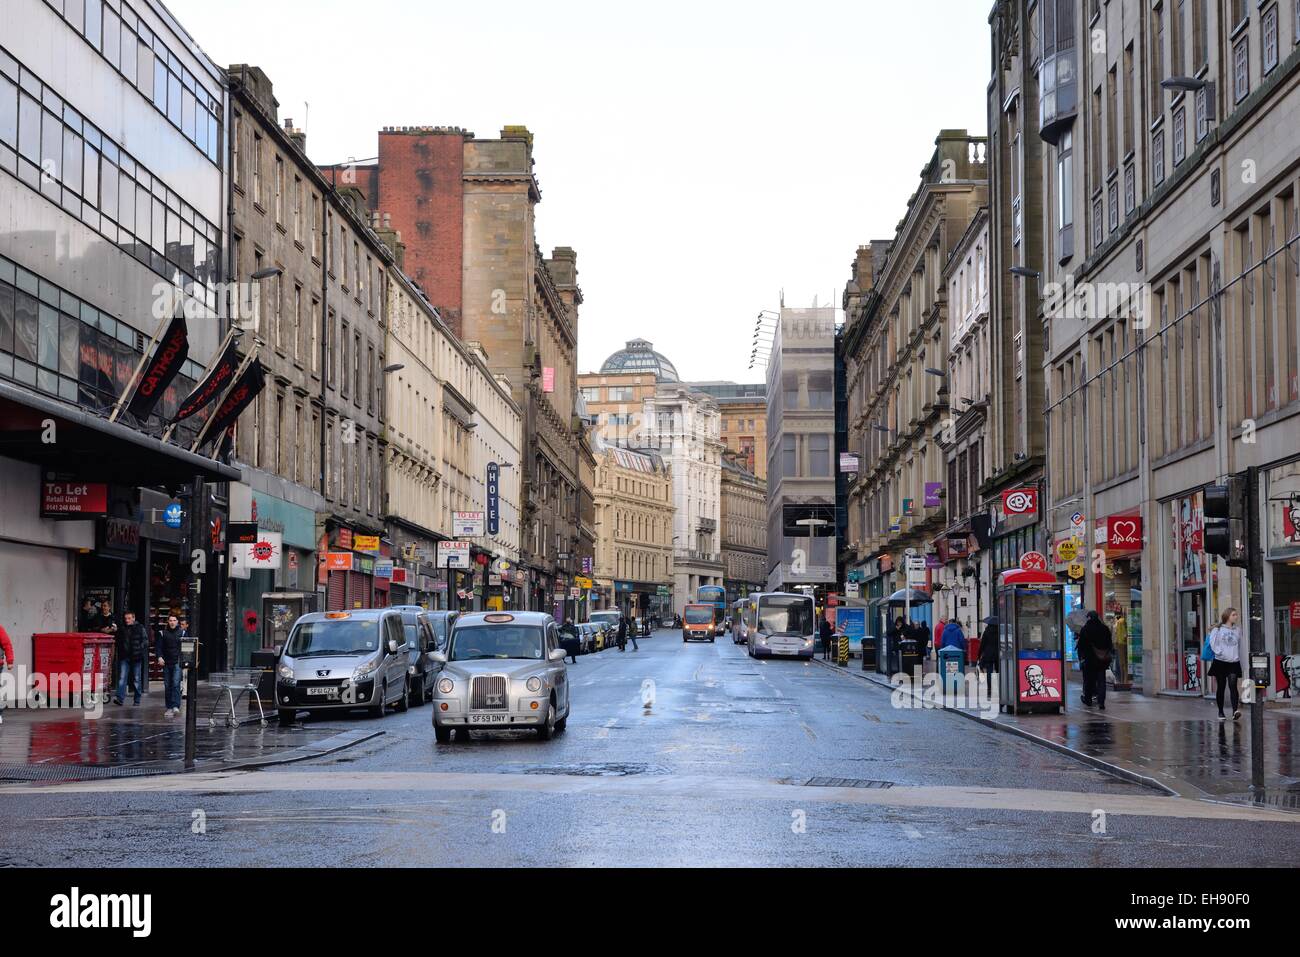 Looking north on Union Street, Glasgow city centre, Scotland, UK Stock Photo